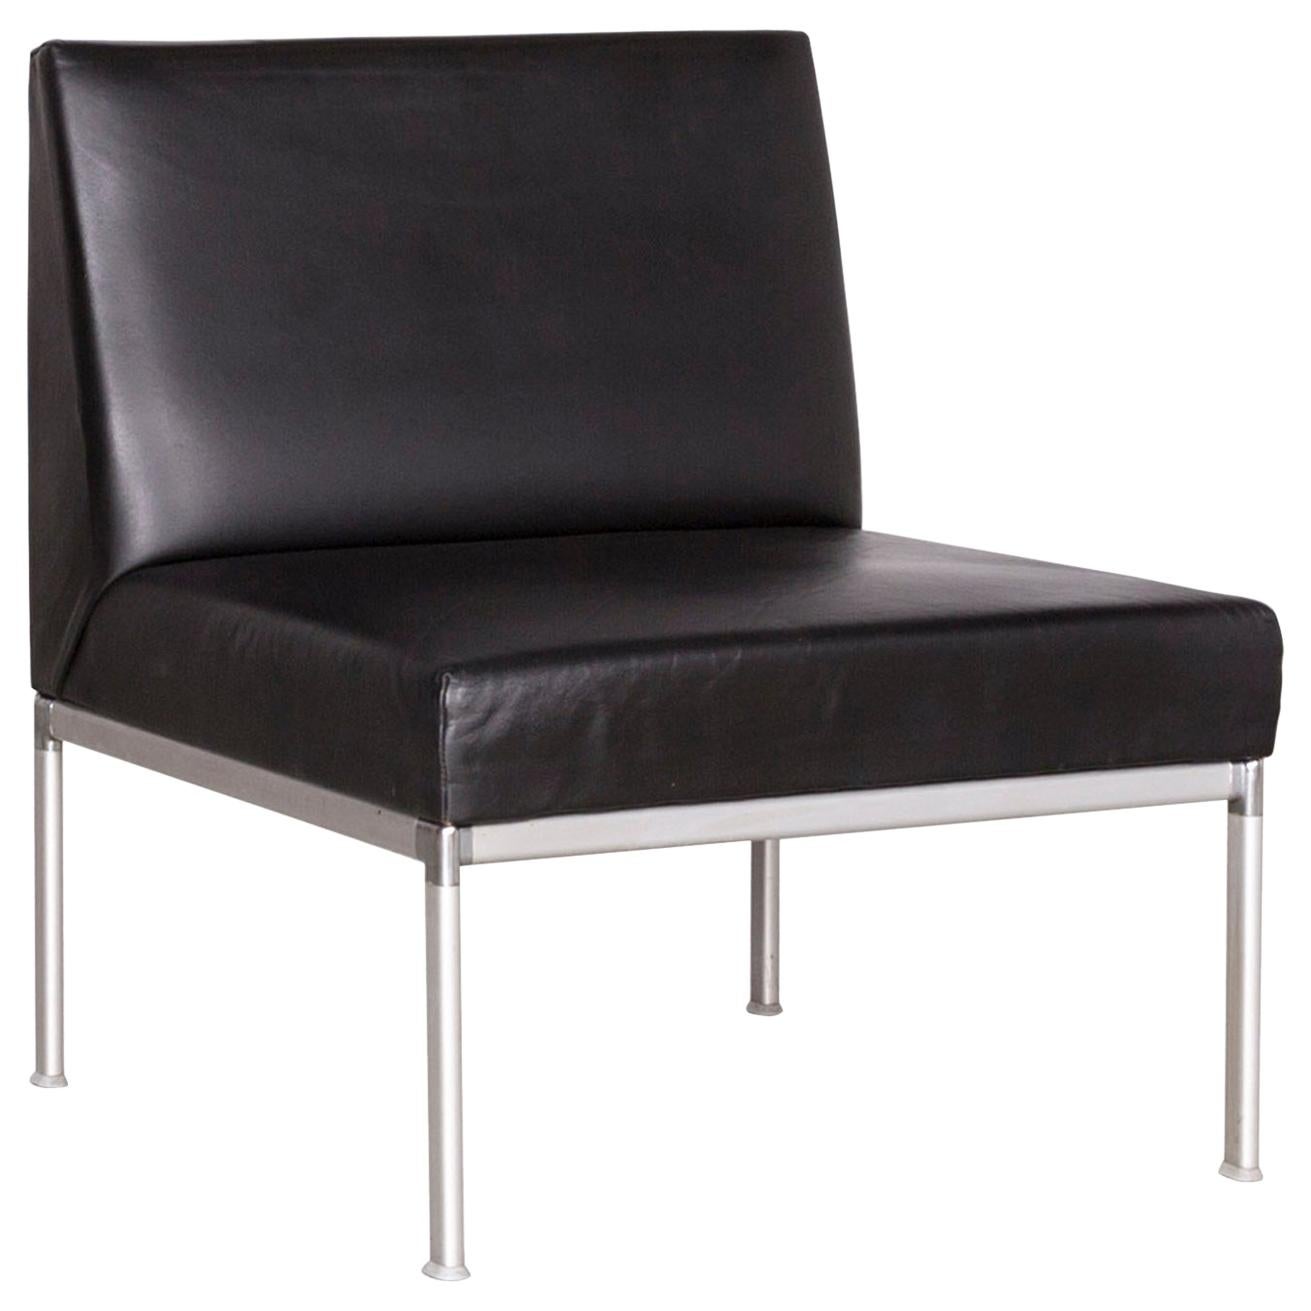 Interlübke Designer Leather Chair Black For Sale